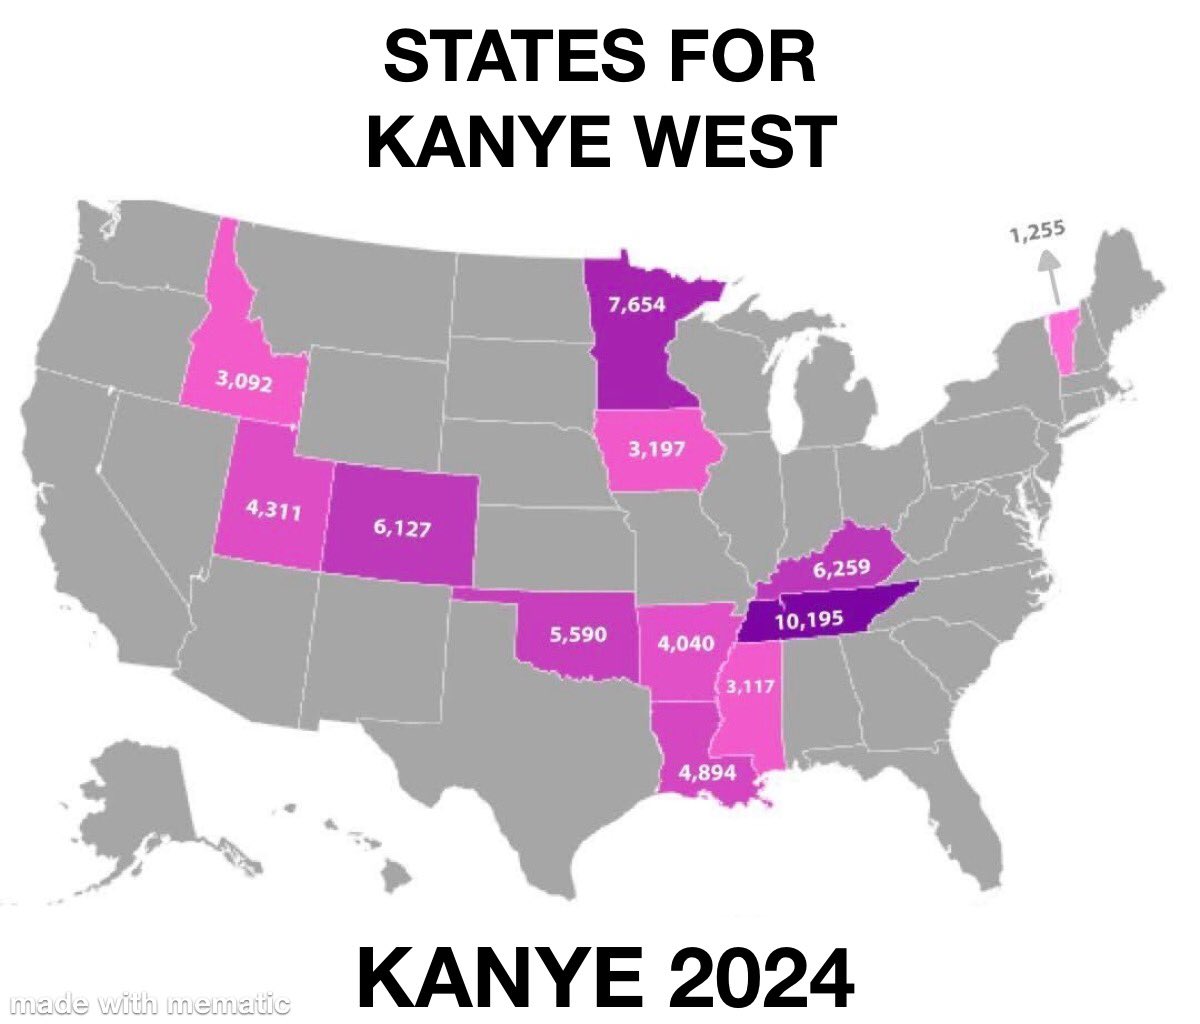 0 votes. Выборы президента США 2020. Kanye West 2024. Предвыборная кампания в США 2020. Выборы в США 2024.